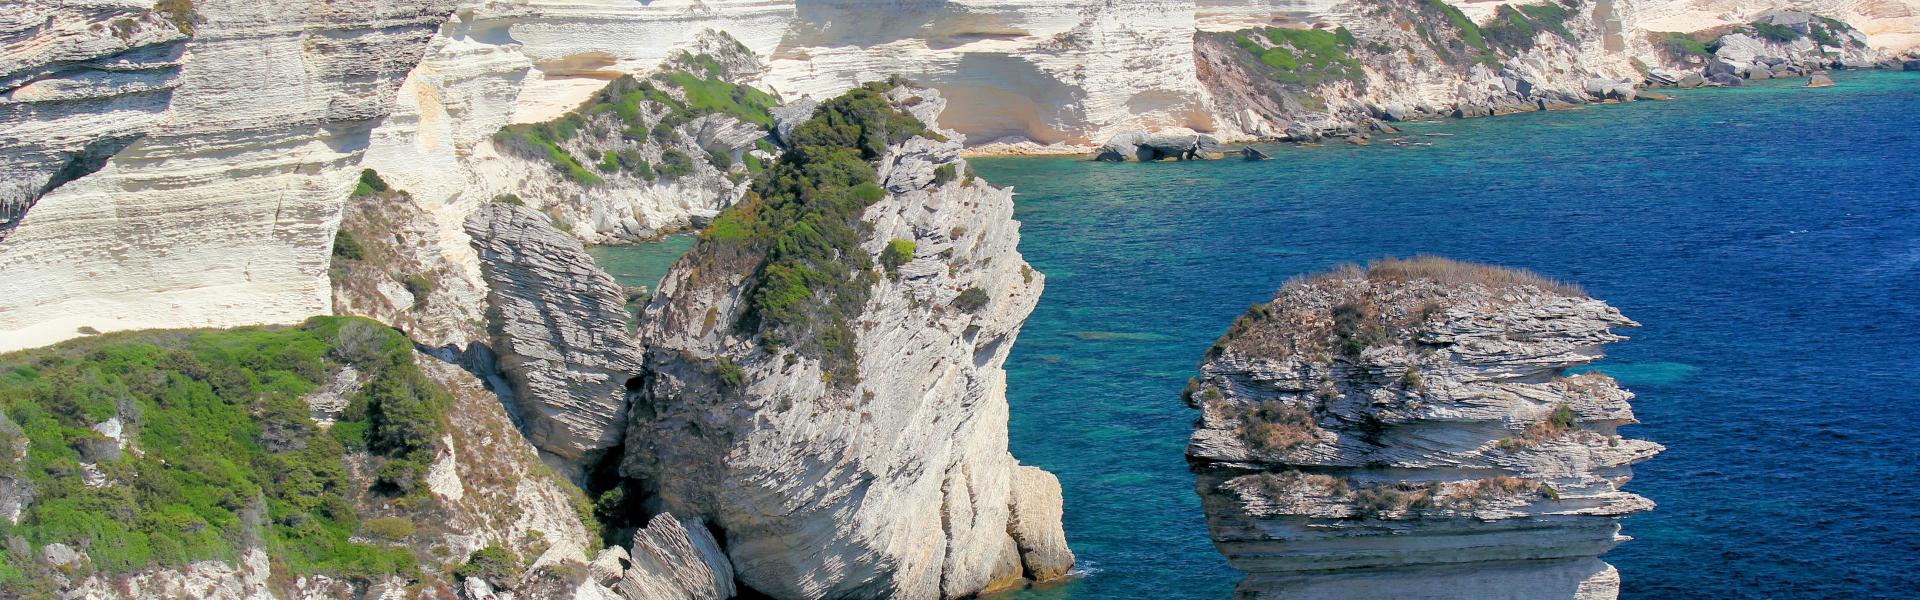 Location de vacances à Viggianello - Corse-du-Sud - Amivac